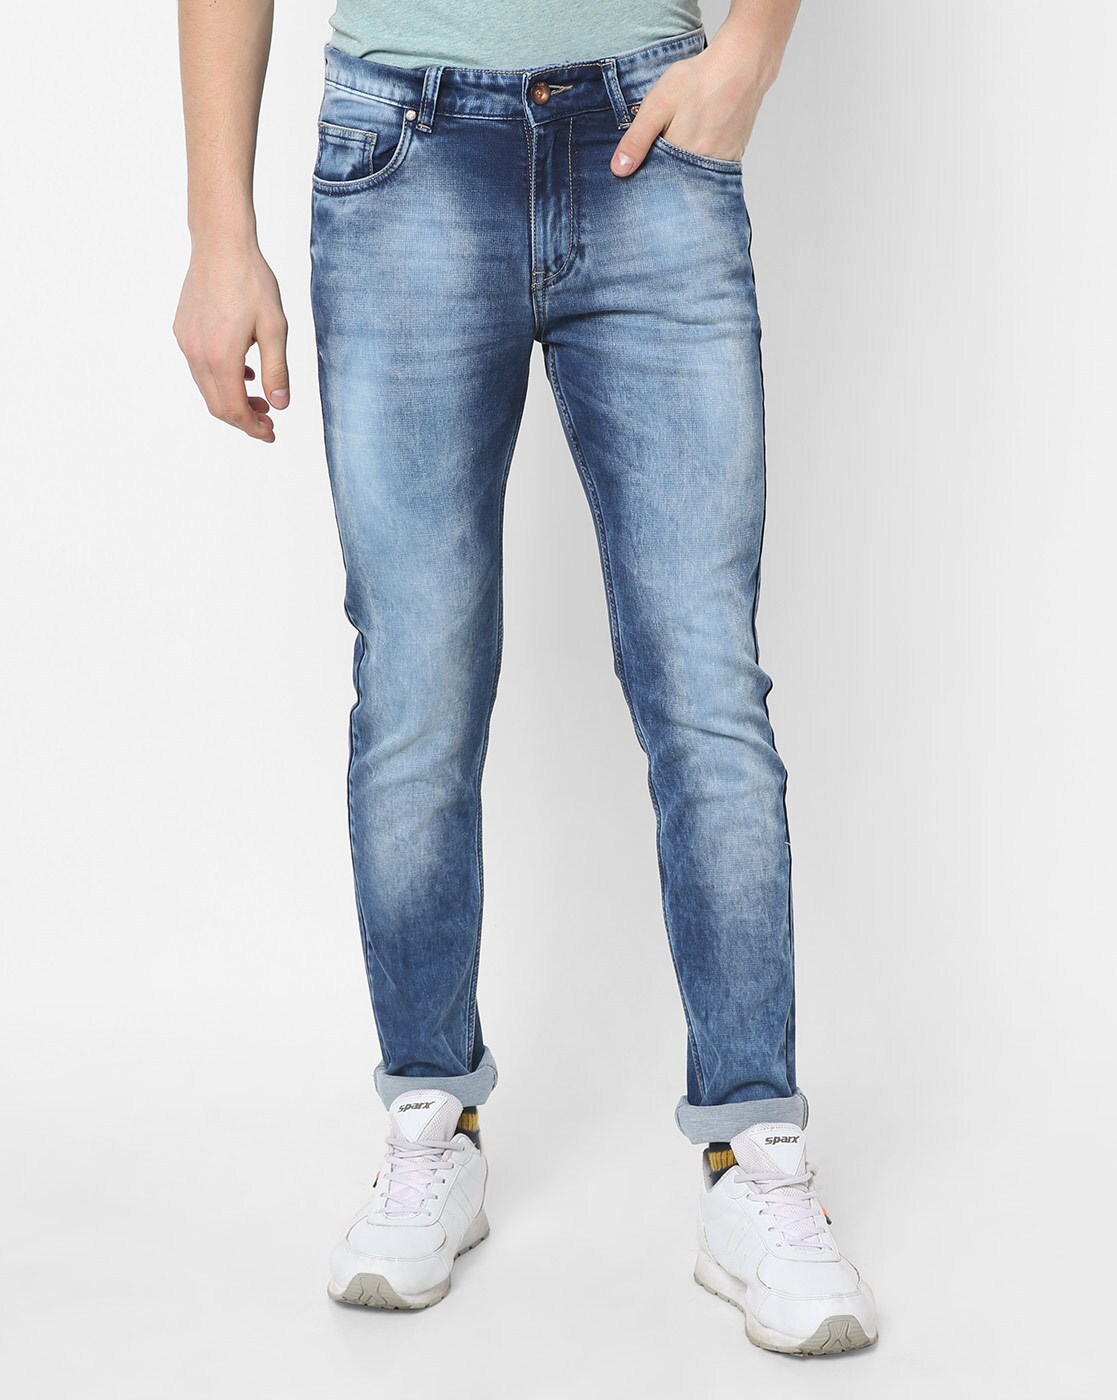 sparx jeans price